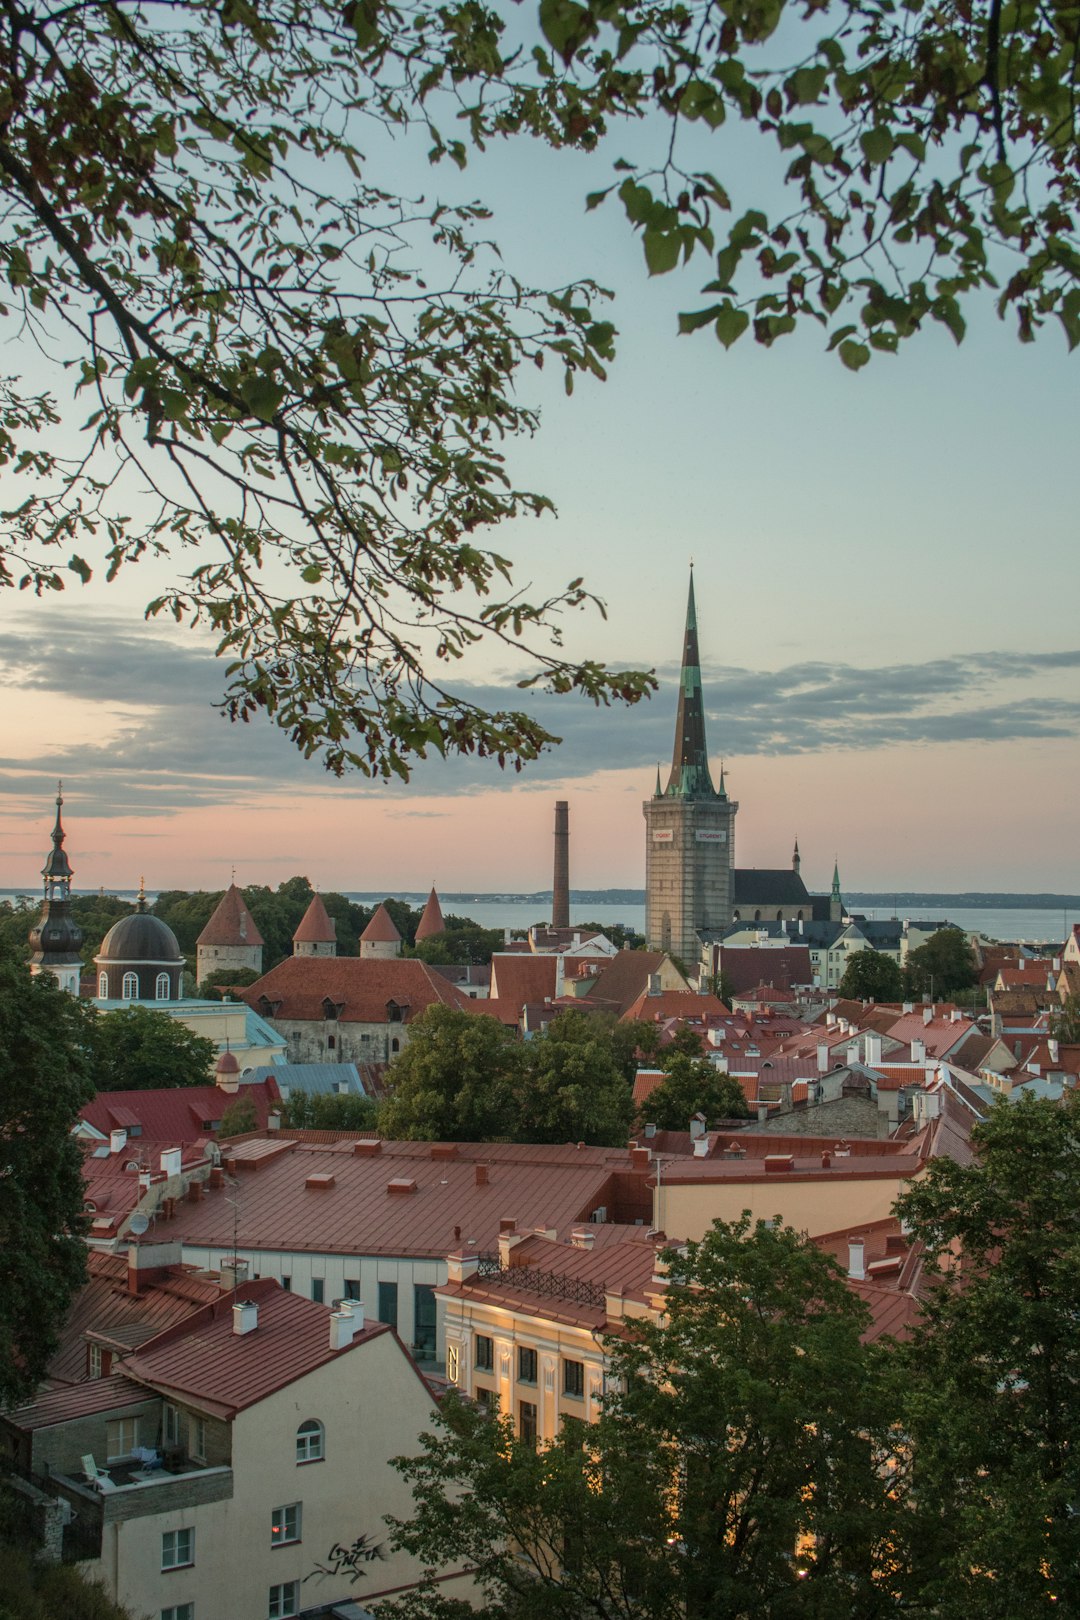 Town photo spot Tallinn Patkuli Viewing Platform